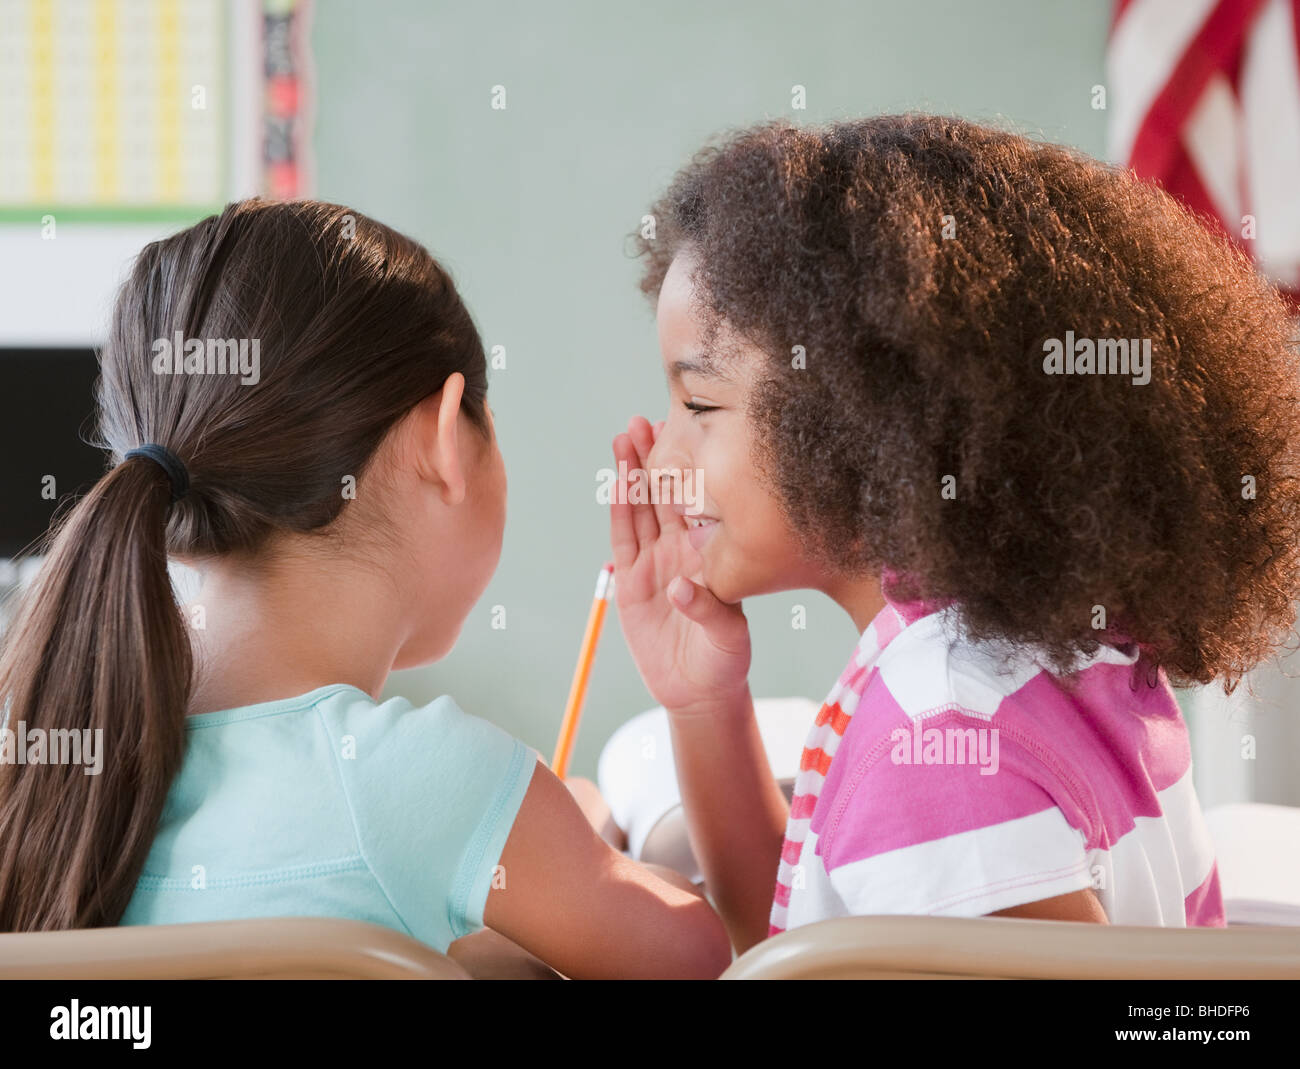 School girl whispering to friend Stock Photo